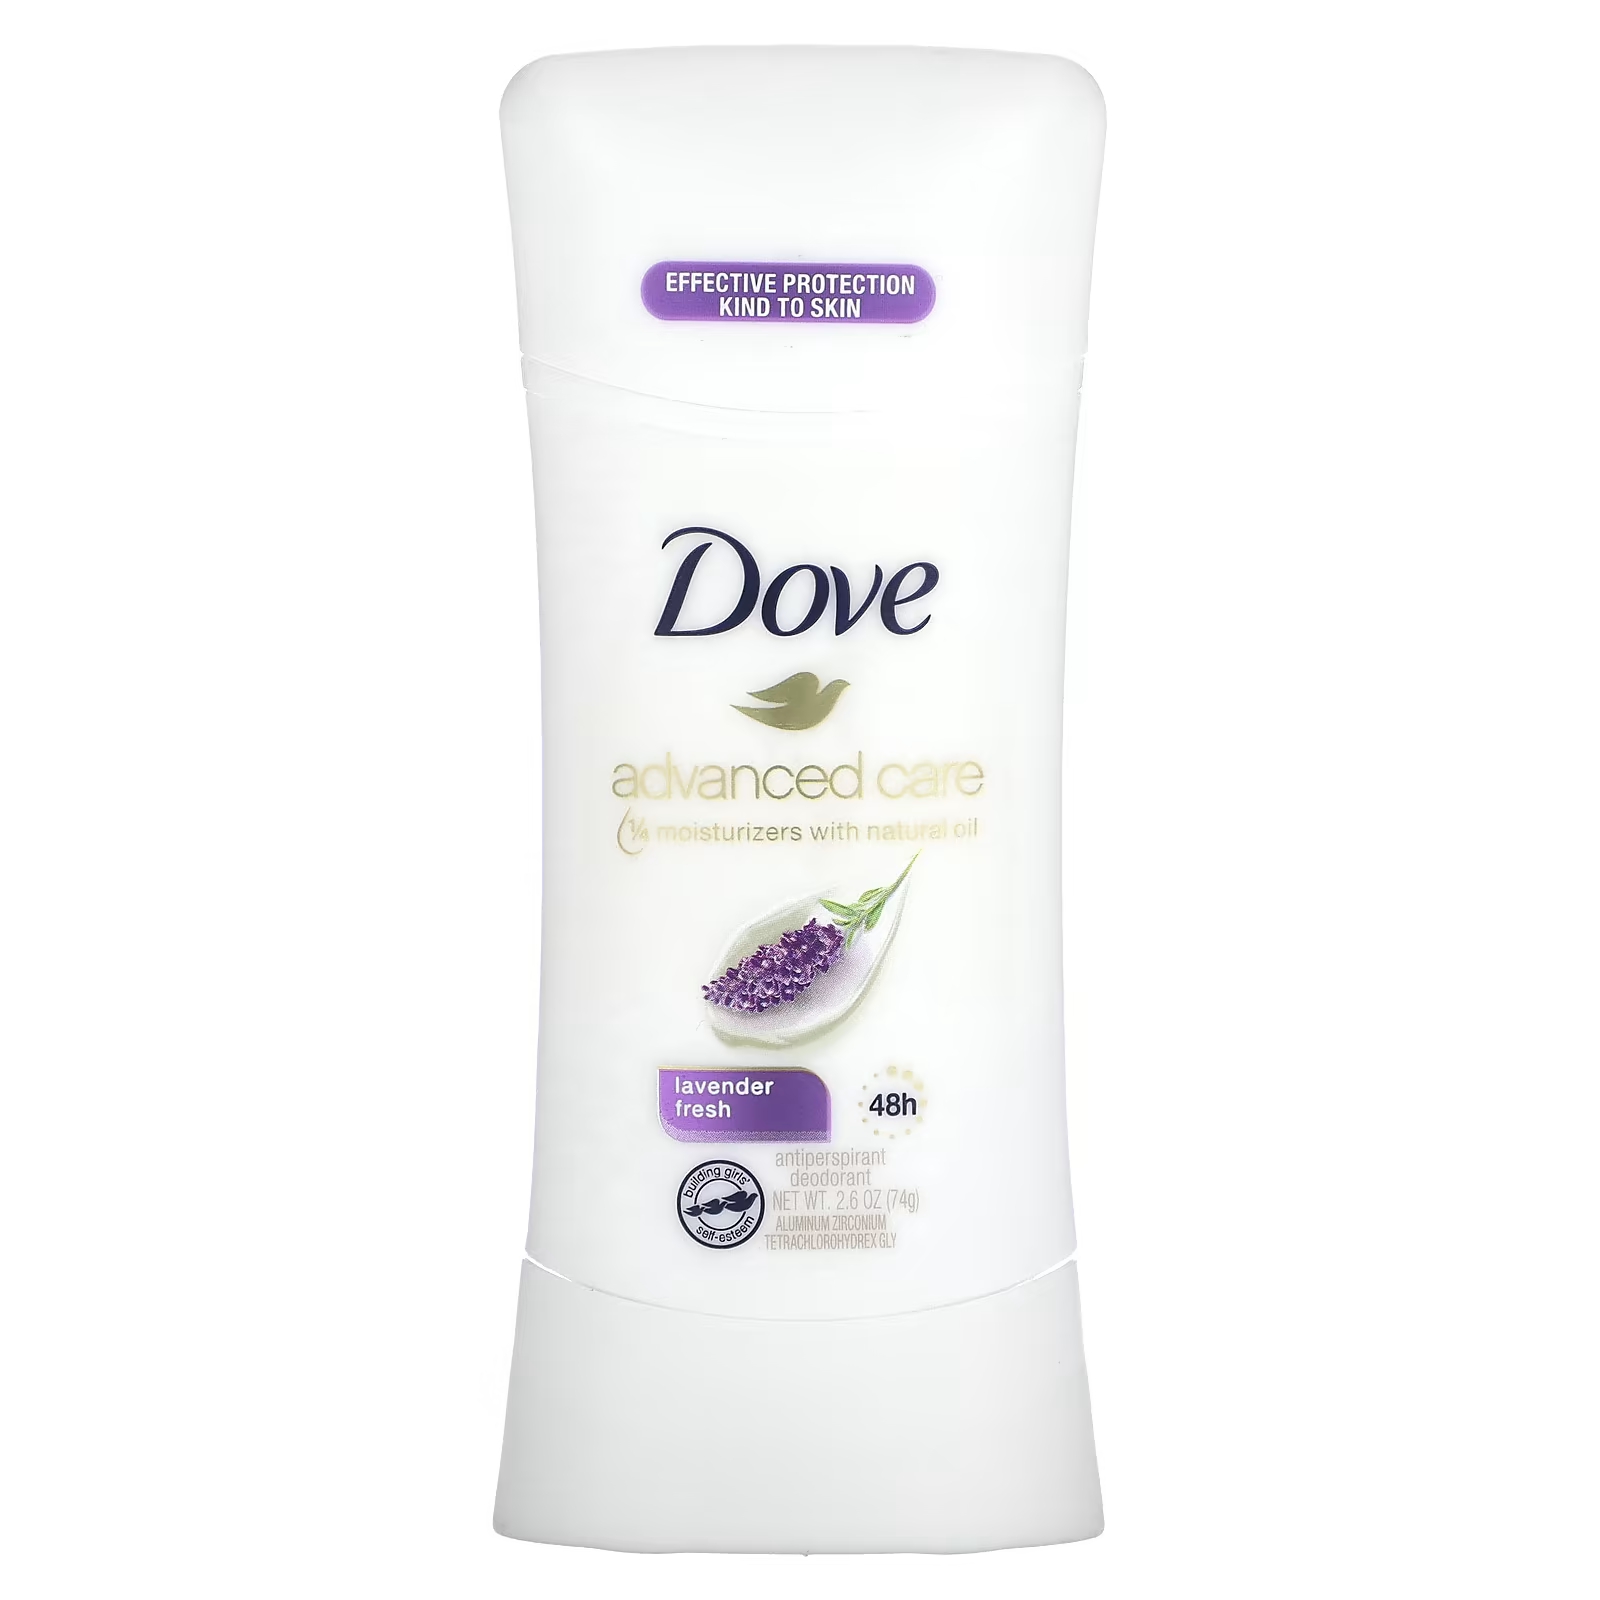 Дезодорант-антиперспирант Dove Advanced Care лавандовая свежесть, 74 гр. dove advanced care дезодорант антиперспирант свежесть лаванды 74 г 2 6 унции